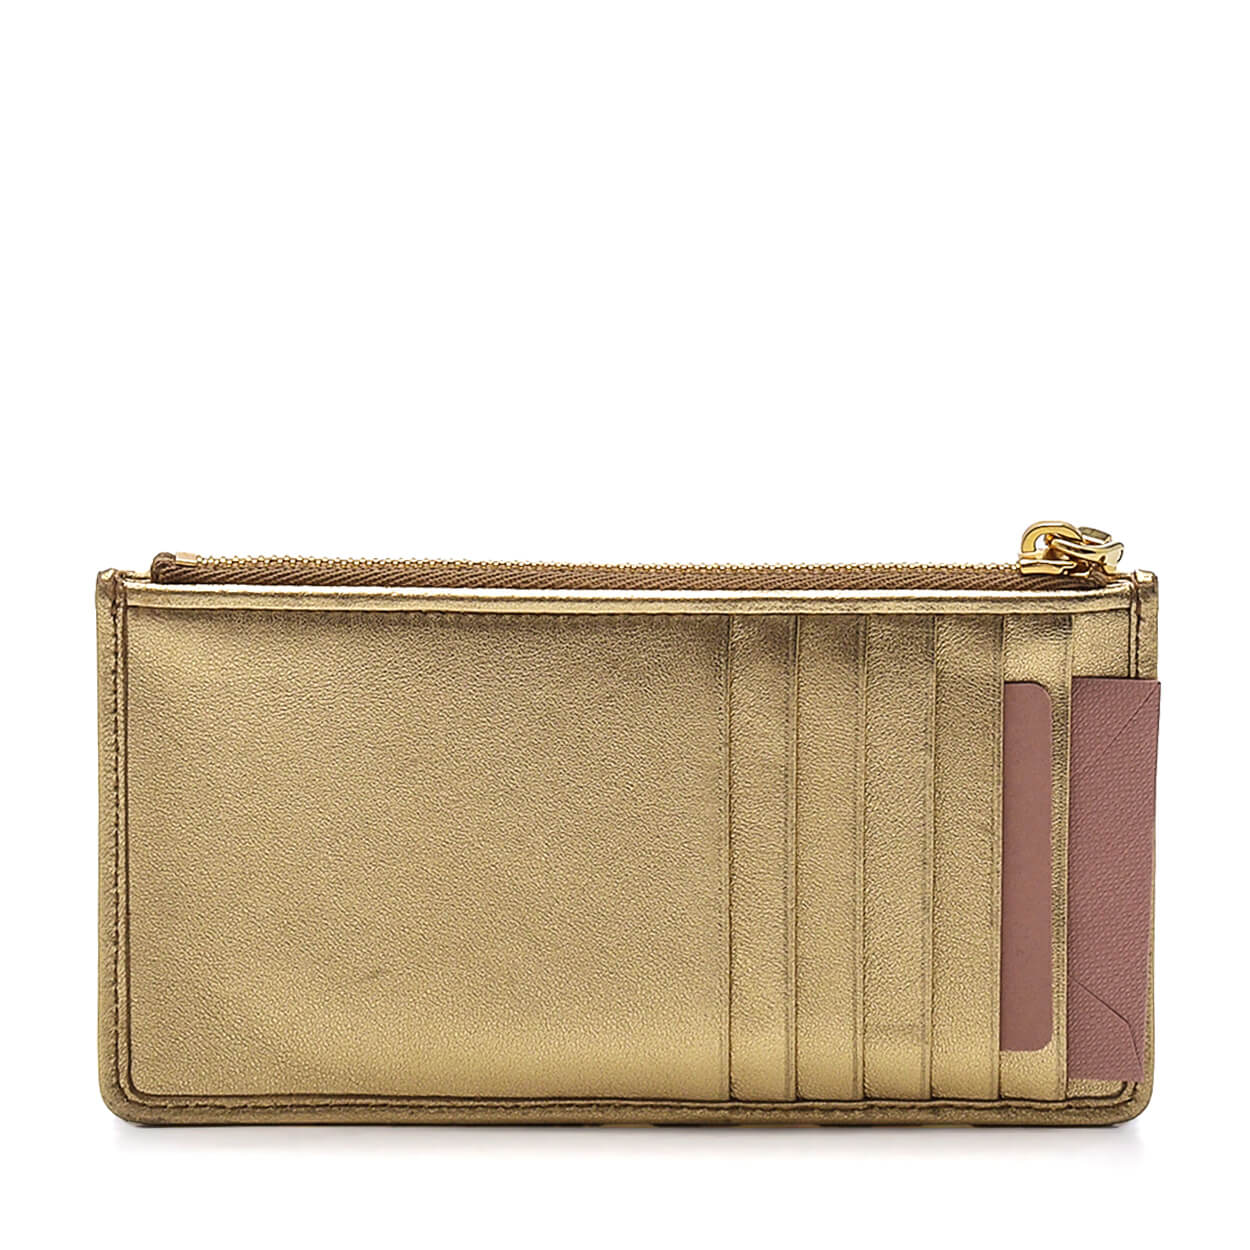 Miu Miu - Gold Gaufre Matelasse Leather Wallet 